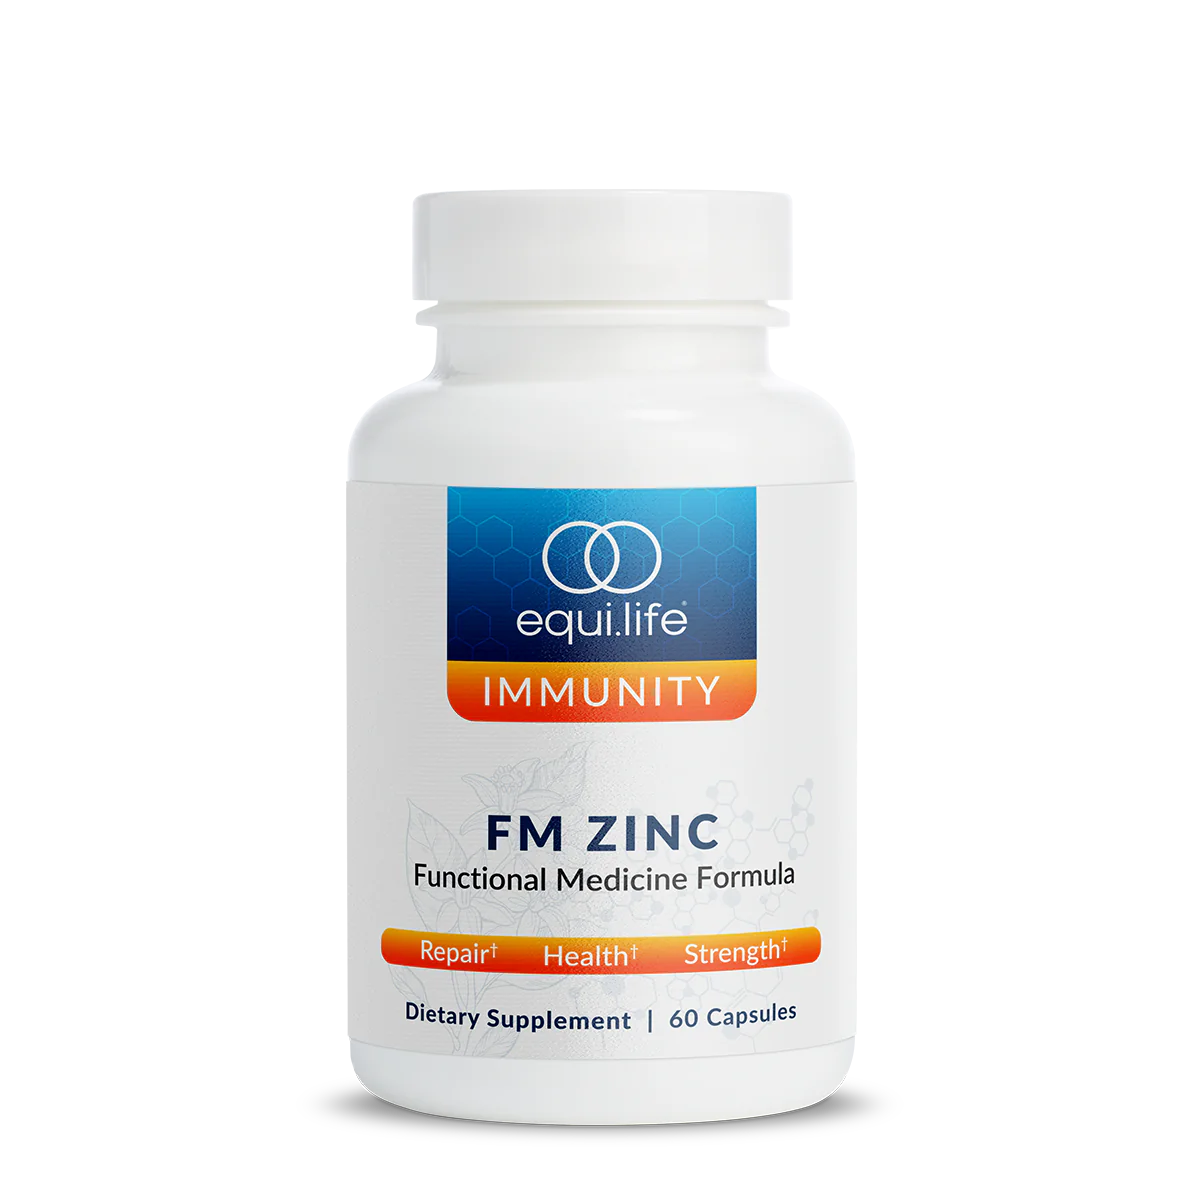 FM Zinc by Equi.life